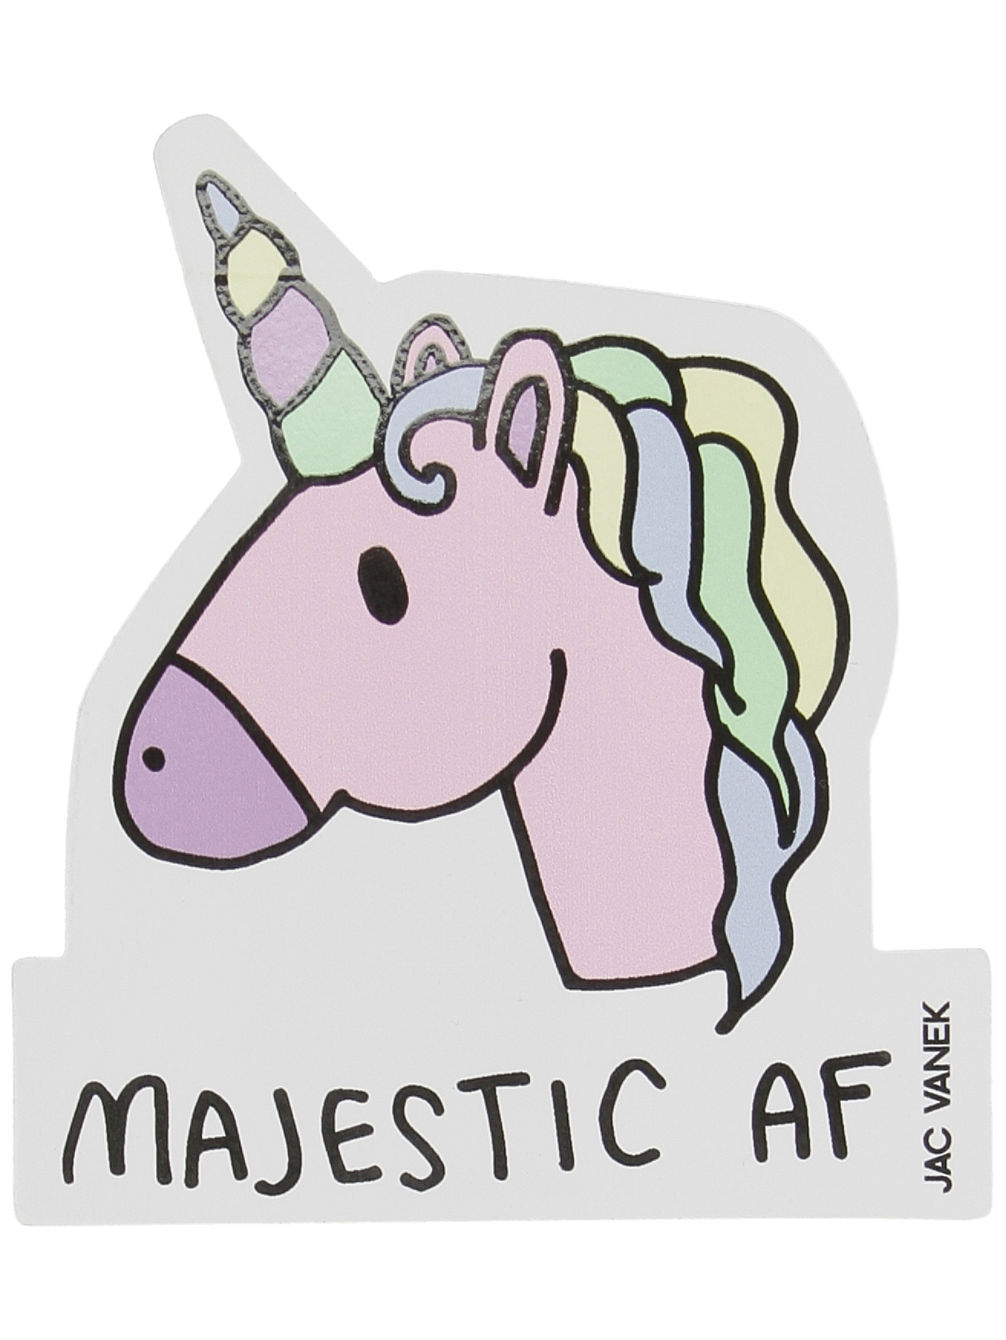 Majestic AF Sticker